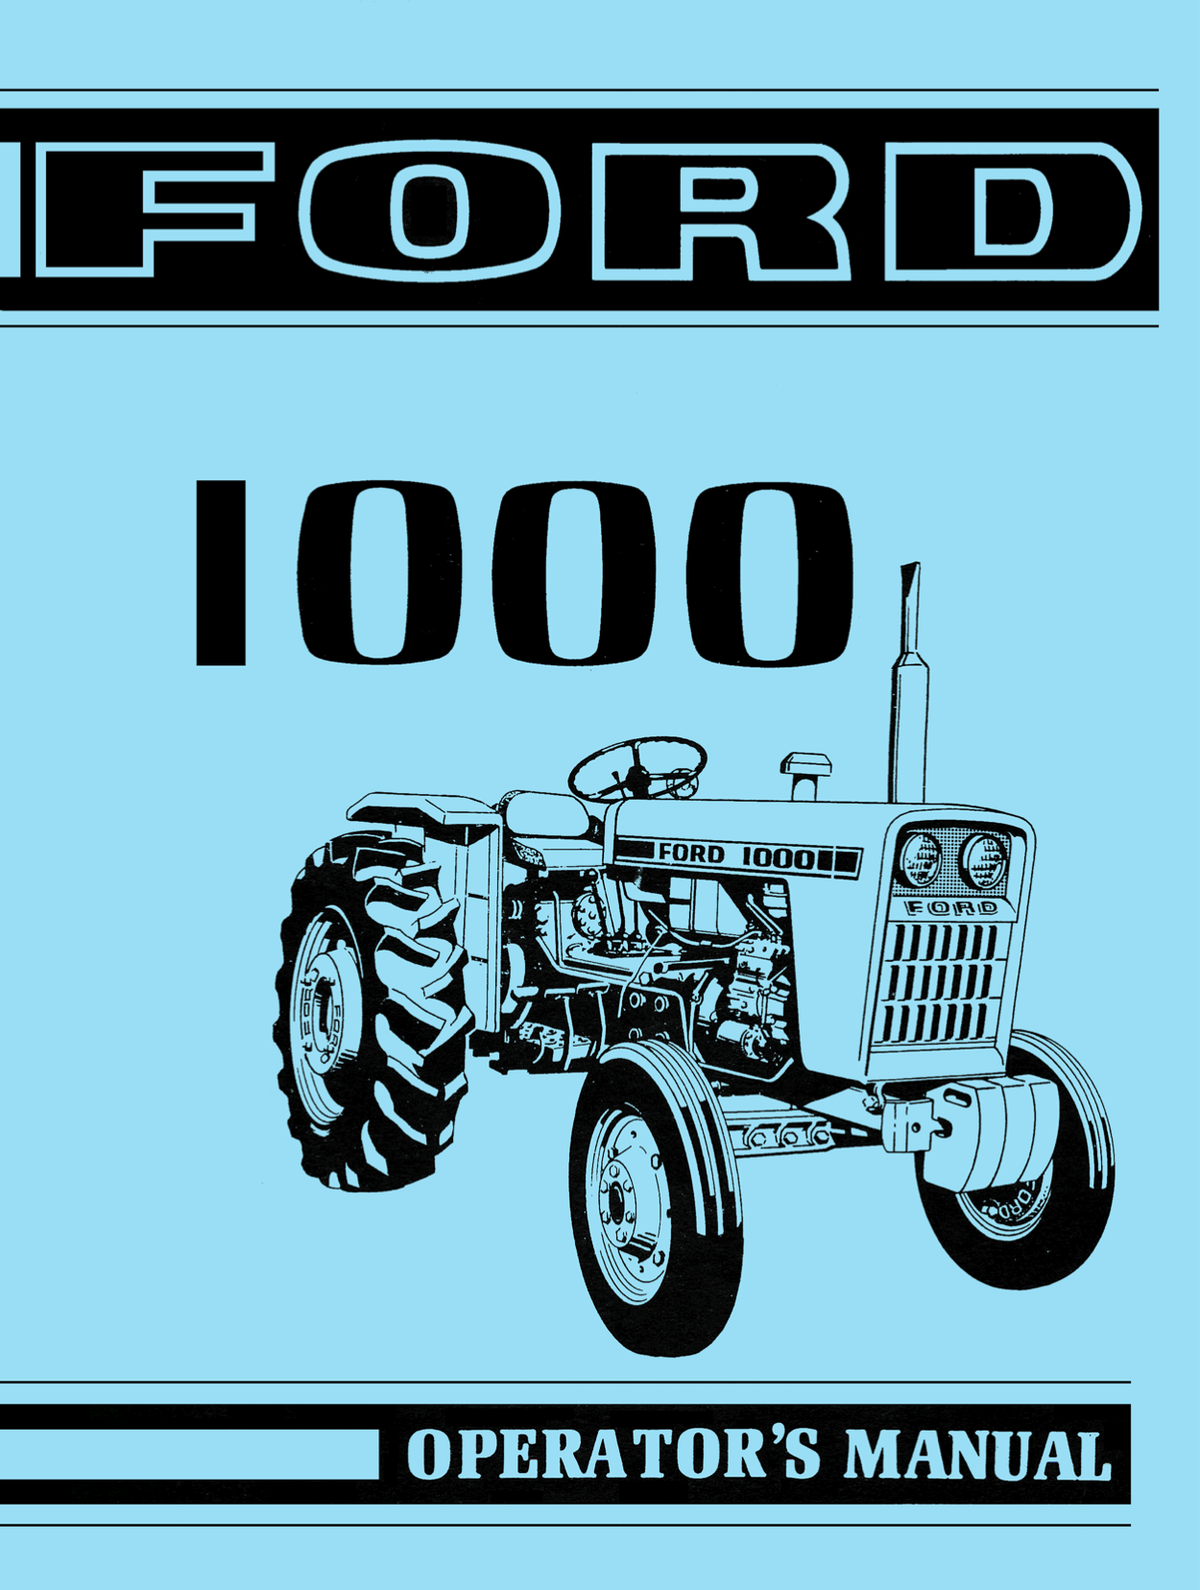 Ford 1000 Tractor - Operator's Manual - Ag Manuals - A Provider of Digital Farm Manuals - 1